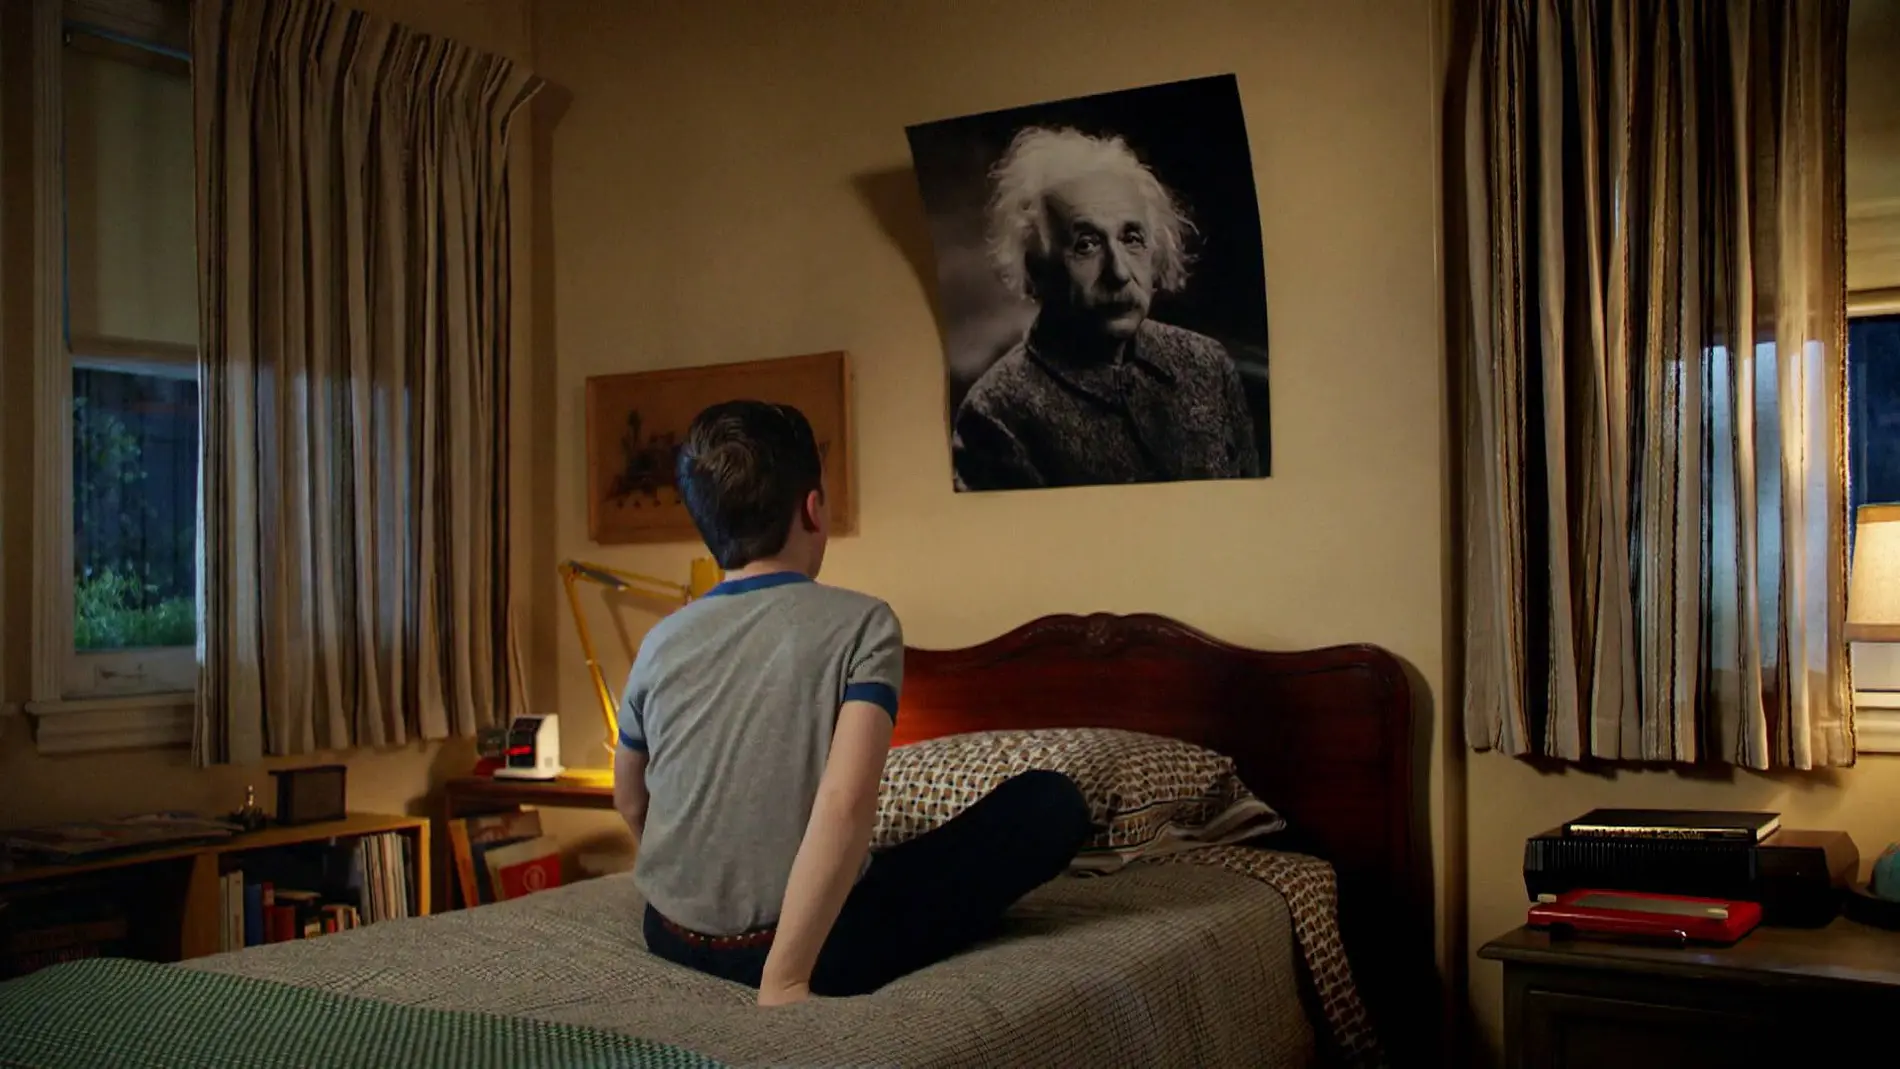 Sheldon hablando con un póster de Albert Einstein